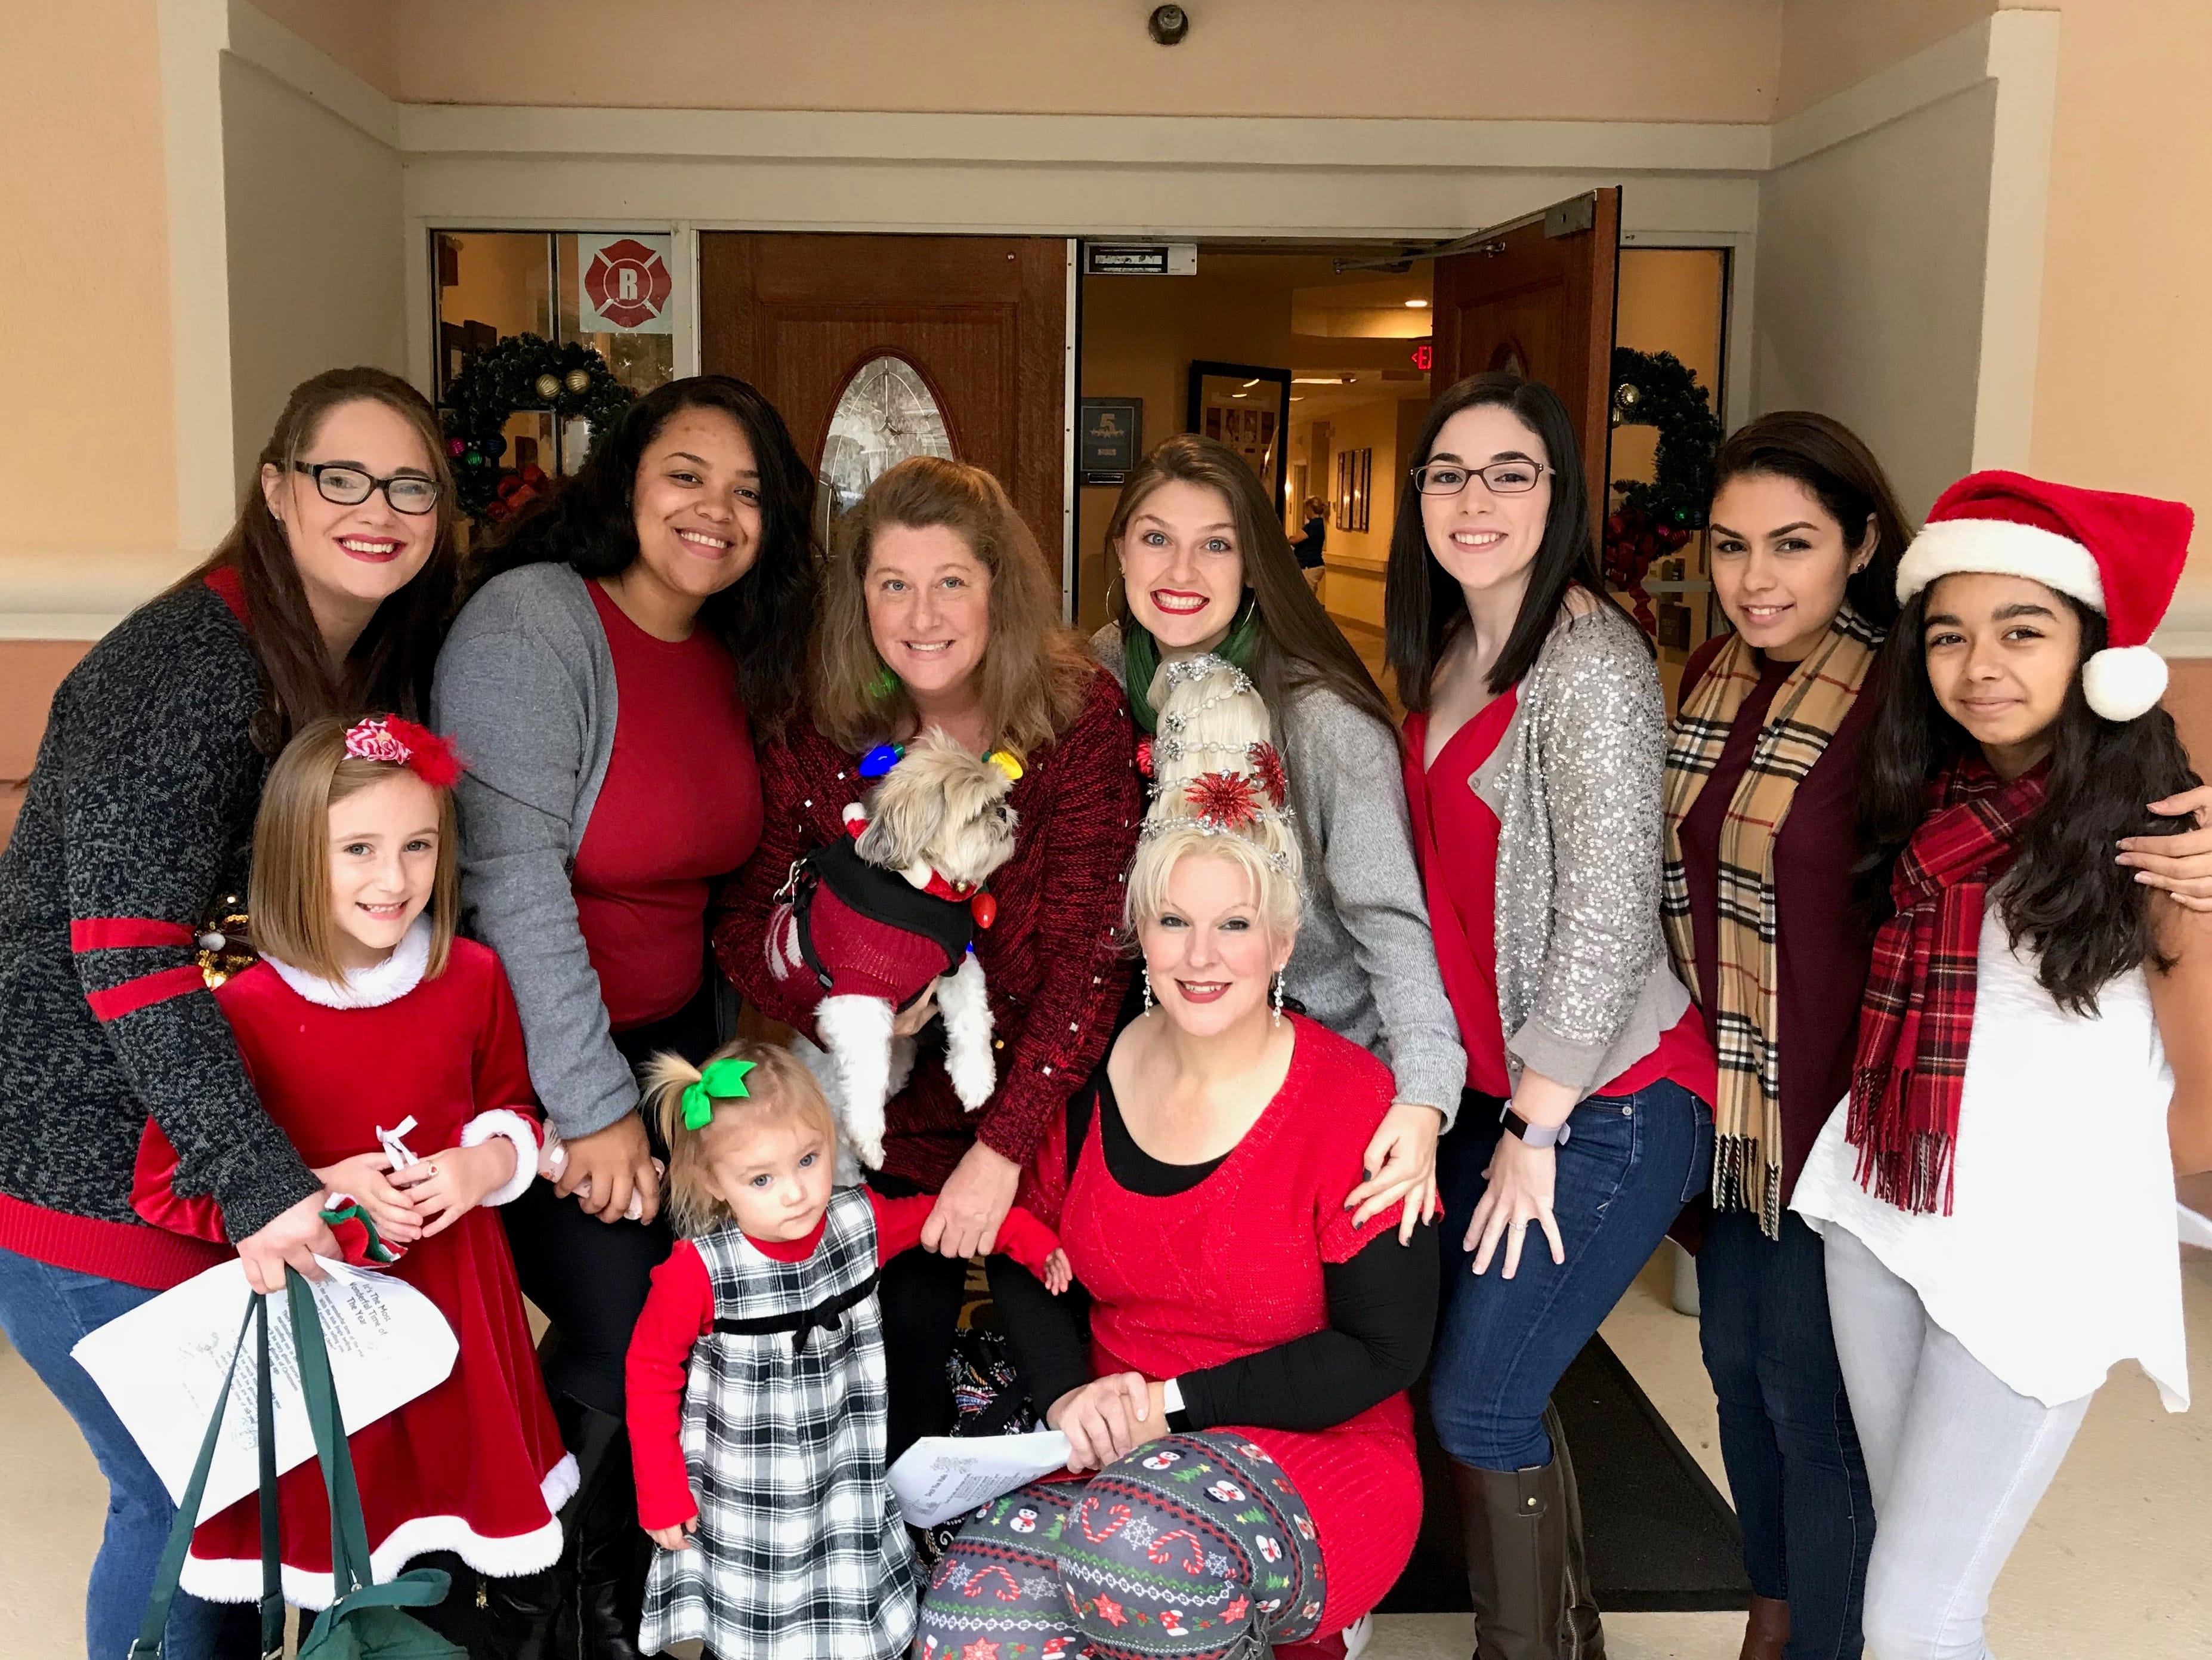 Tampa Nursing Students Spread Holiday Cheer